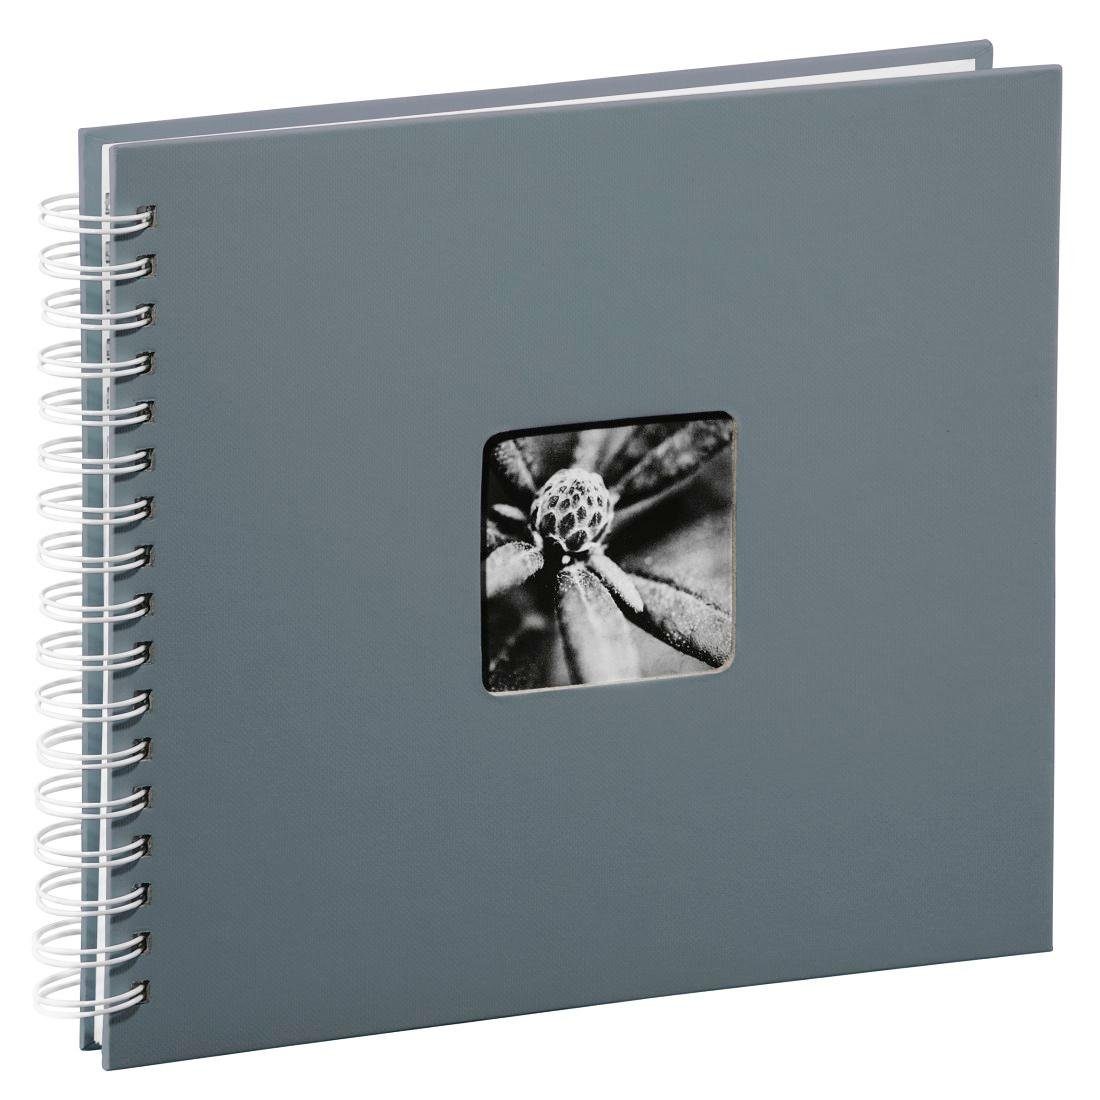 Hama Fotoalbum Spiralalbum 28 x cm, grau weiße 50 Seiten, Fotoalbum, 24